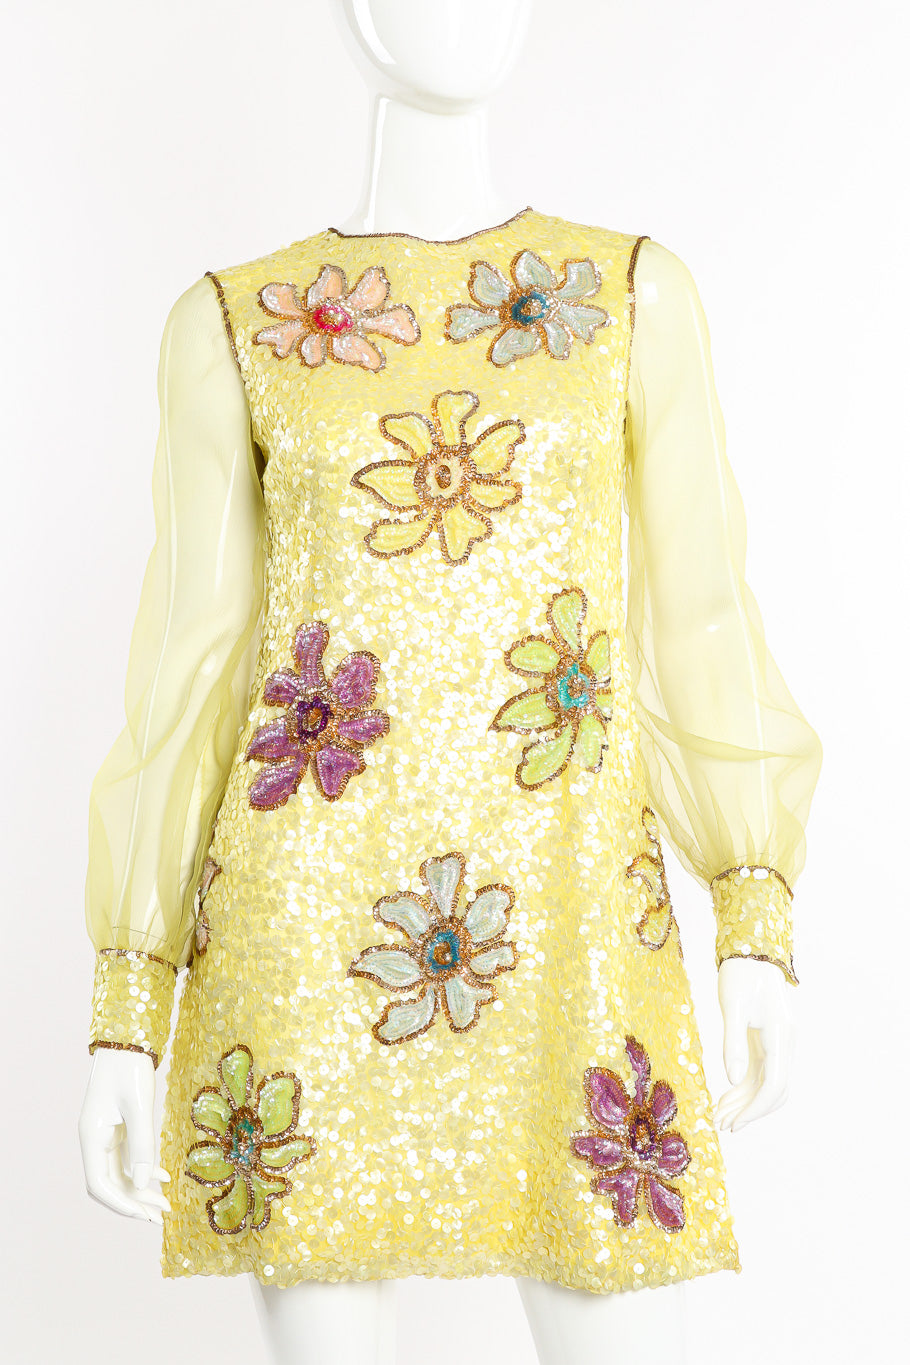 Vintage Courlande Silk Organza Flower Sequin Dress front view on mannequin closeup @Recessla